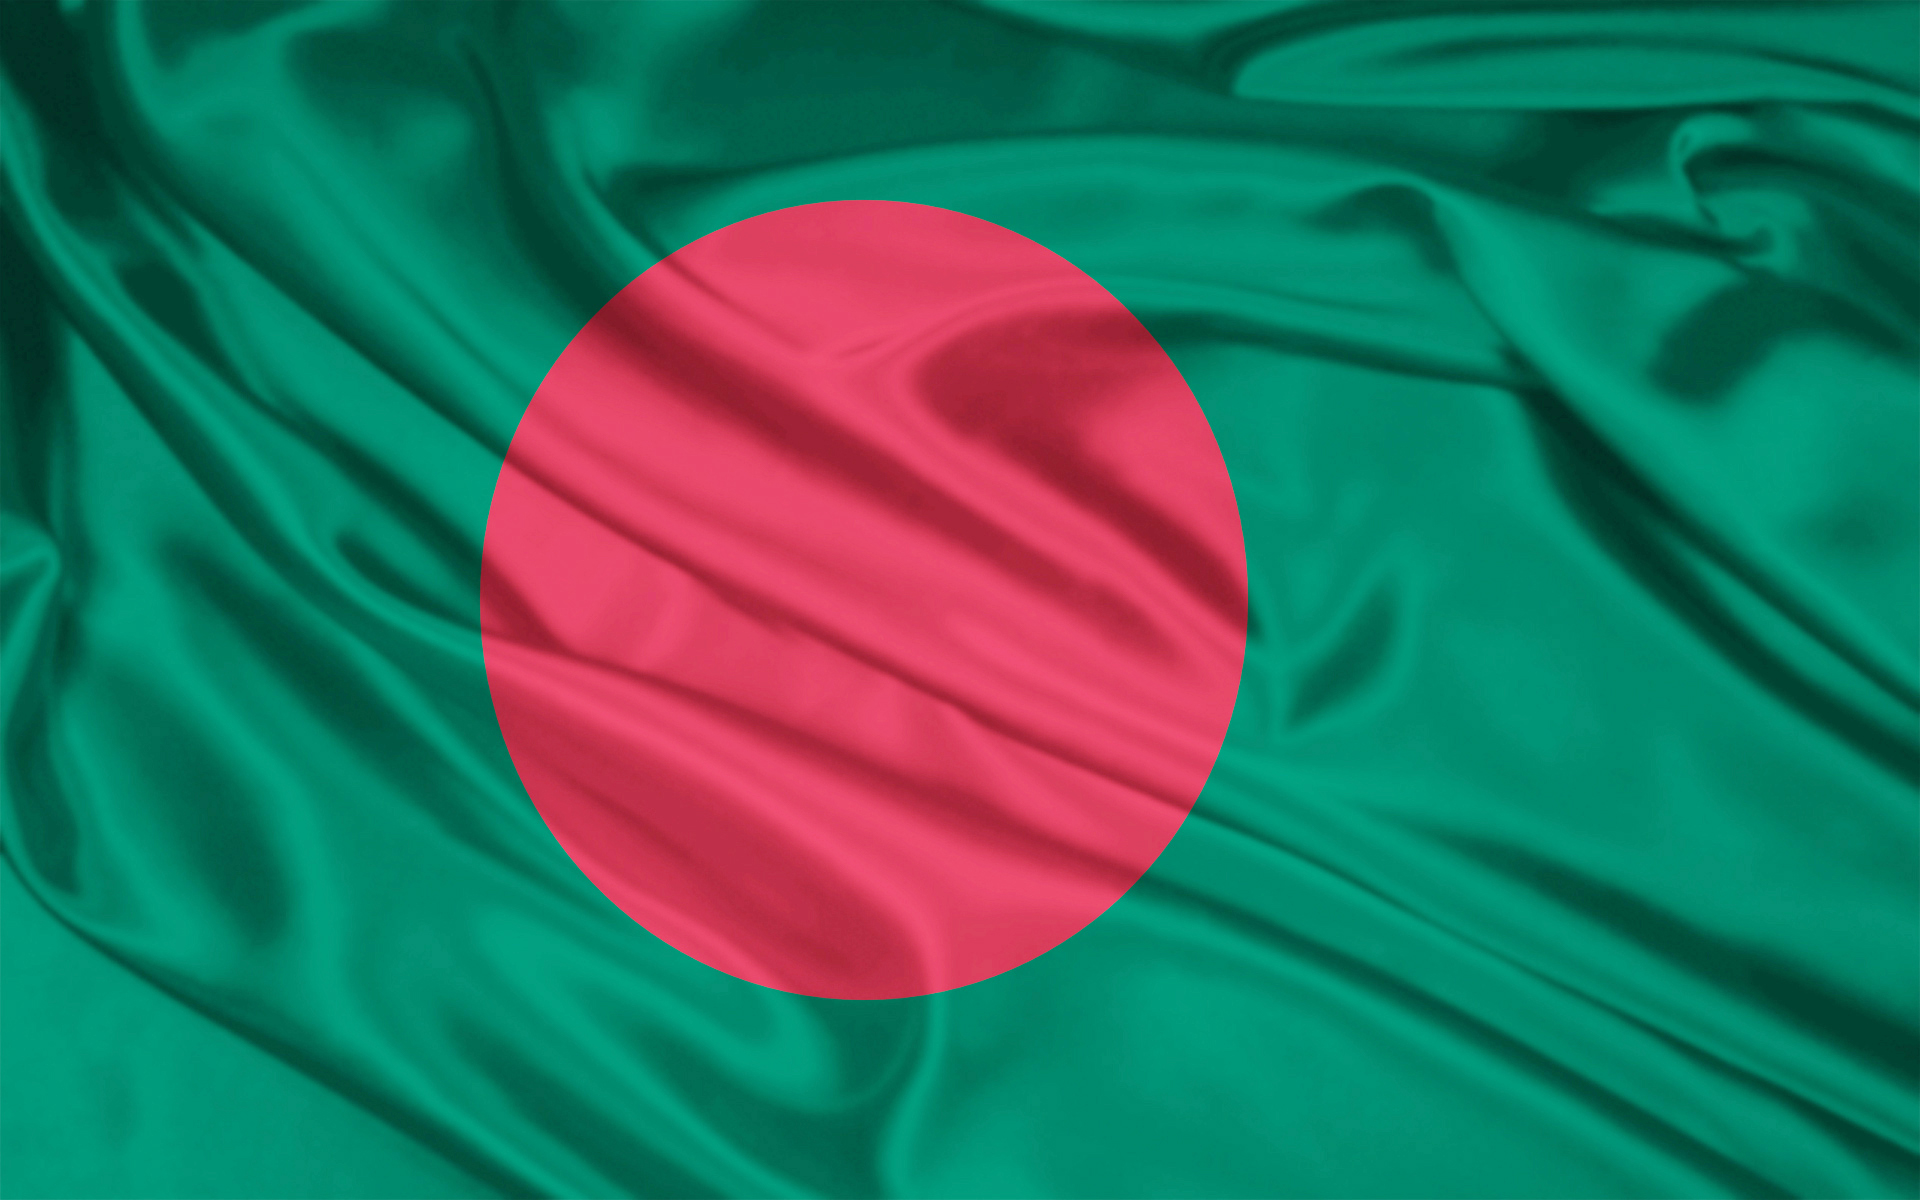 bangladesh flag fondos de pantalla hd,verde,rojo,verde azulado,turquesa,agua